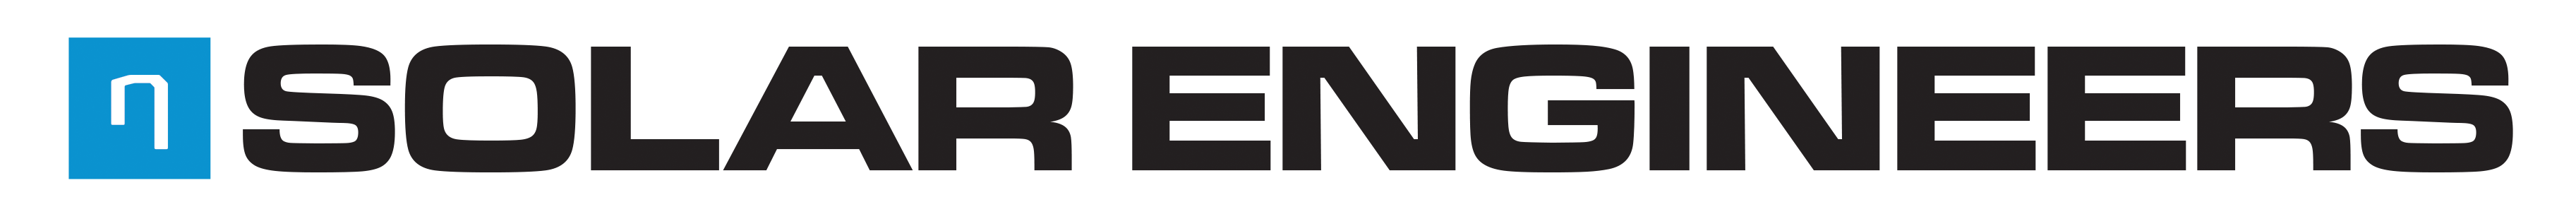 Solarengineers logo